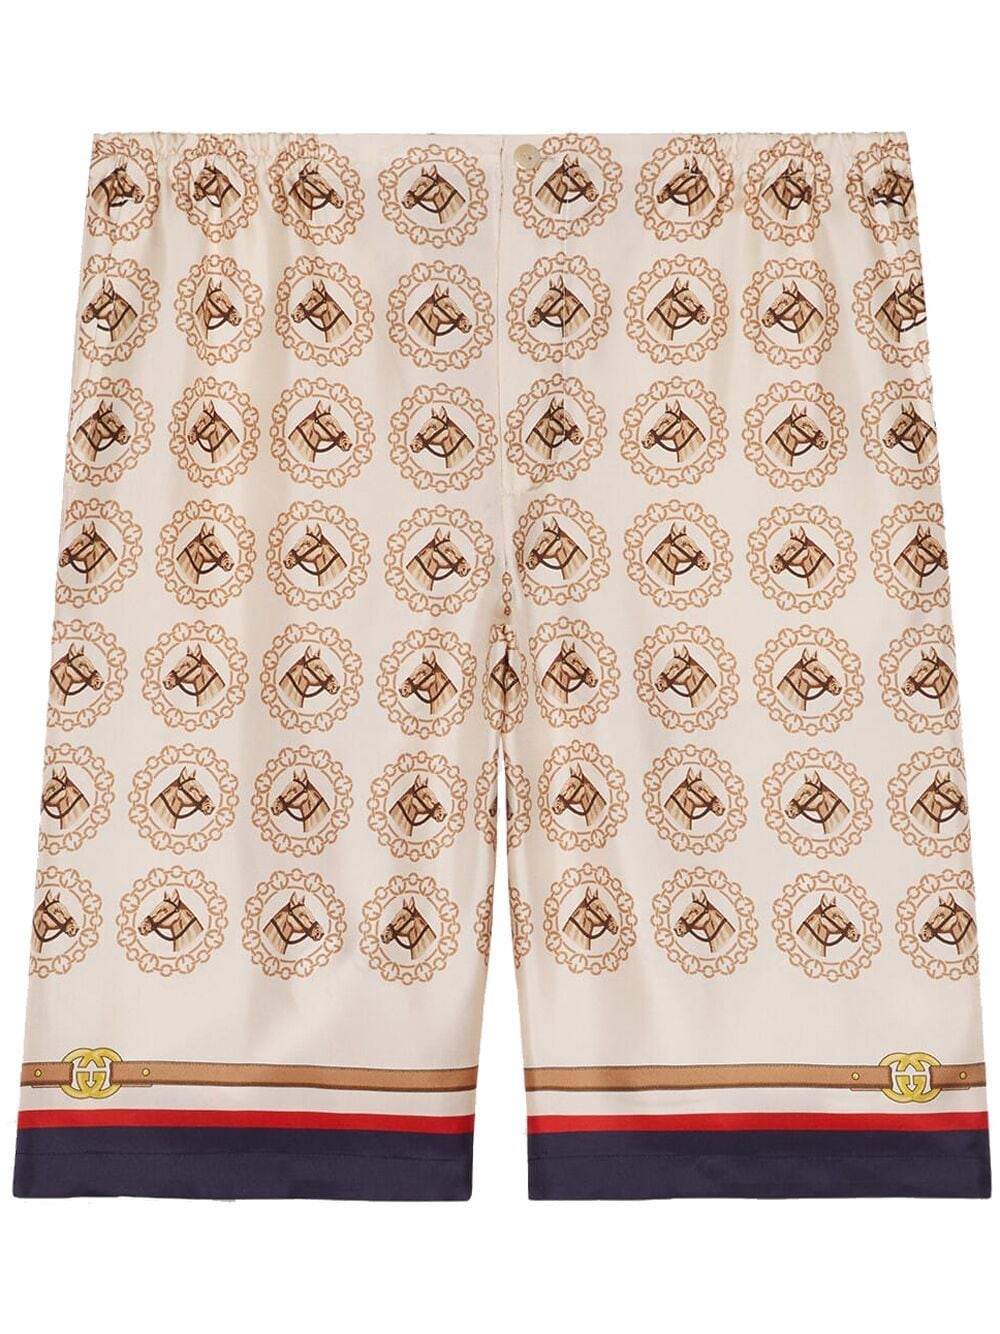 Gucci poppy-print Silk Boxer Shorts - Farfetch